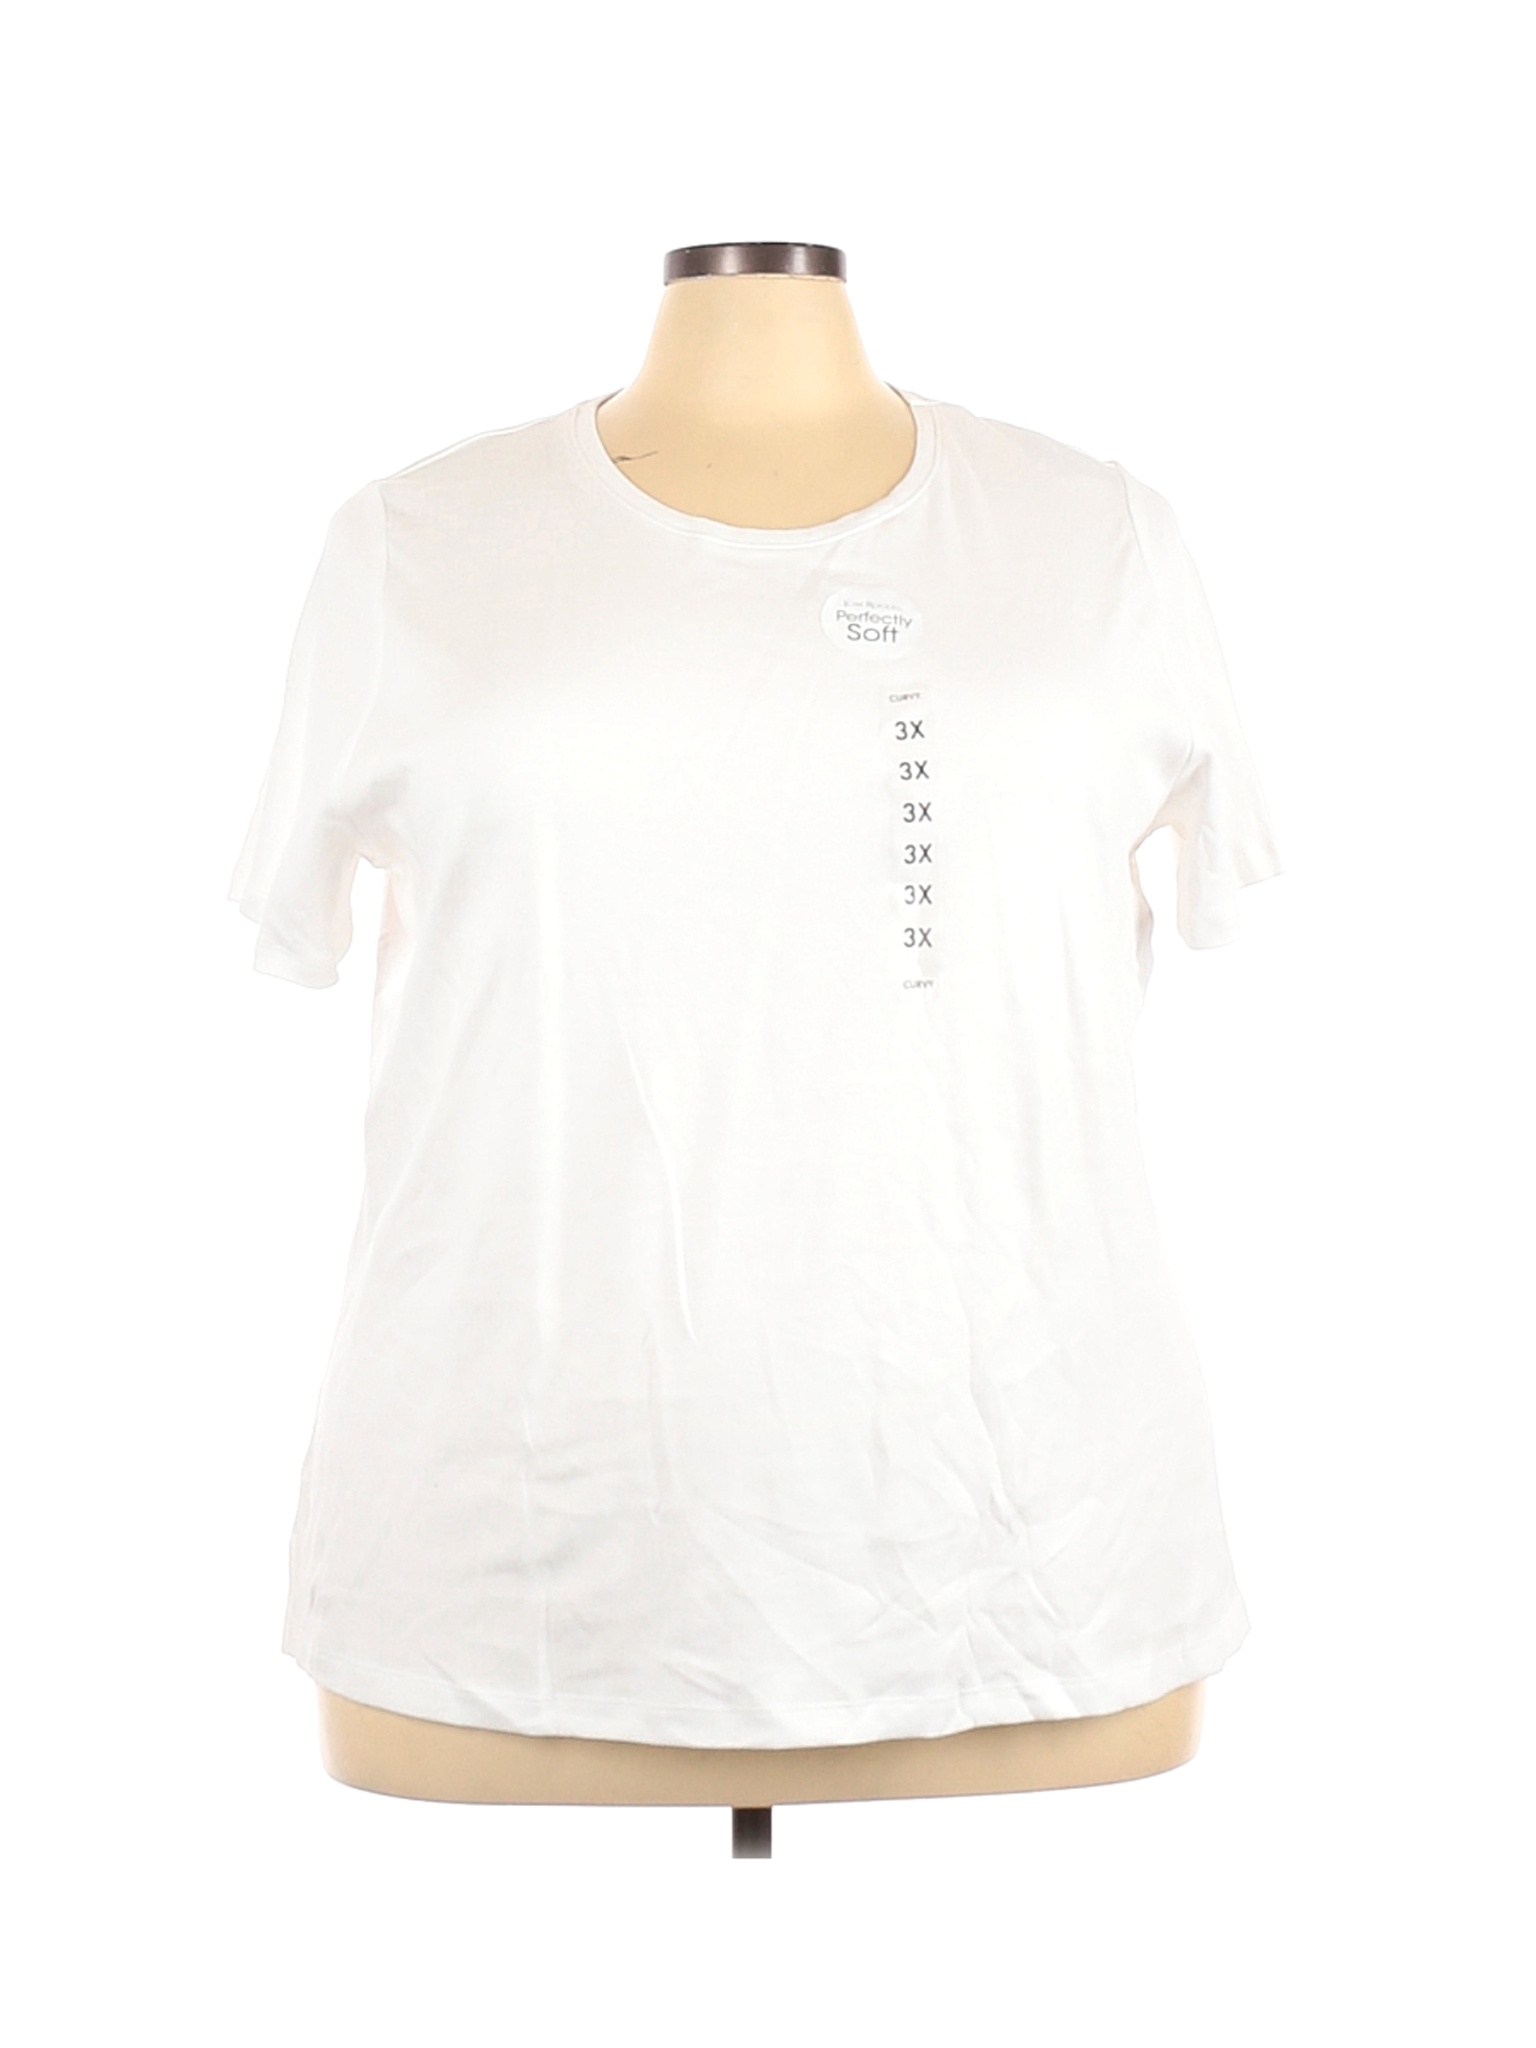 NWT Kim Rogers Women White Short Sleeve T-Shirt 3X Plus | eBay